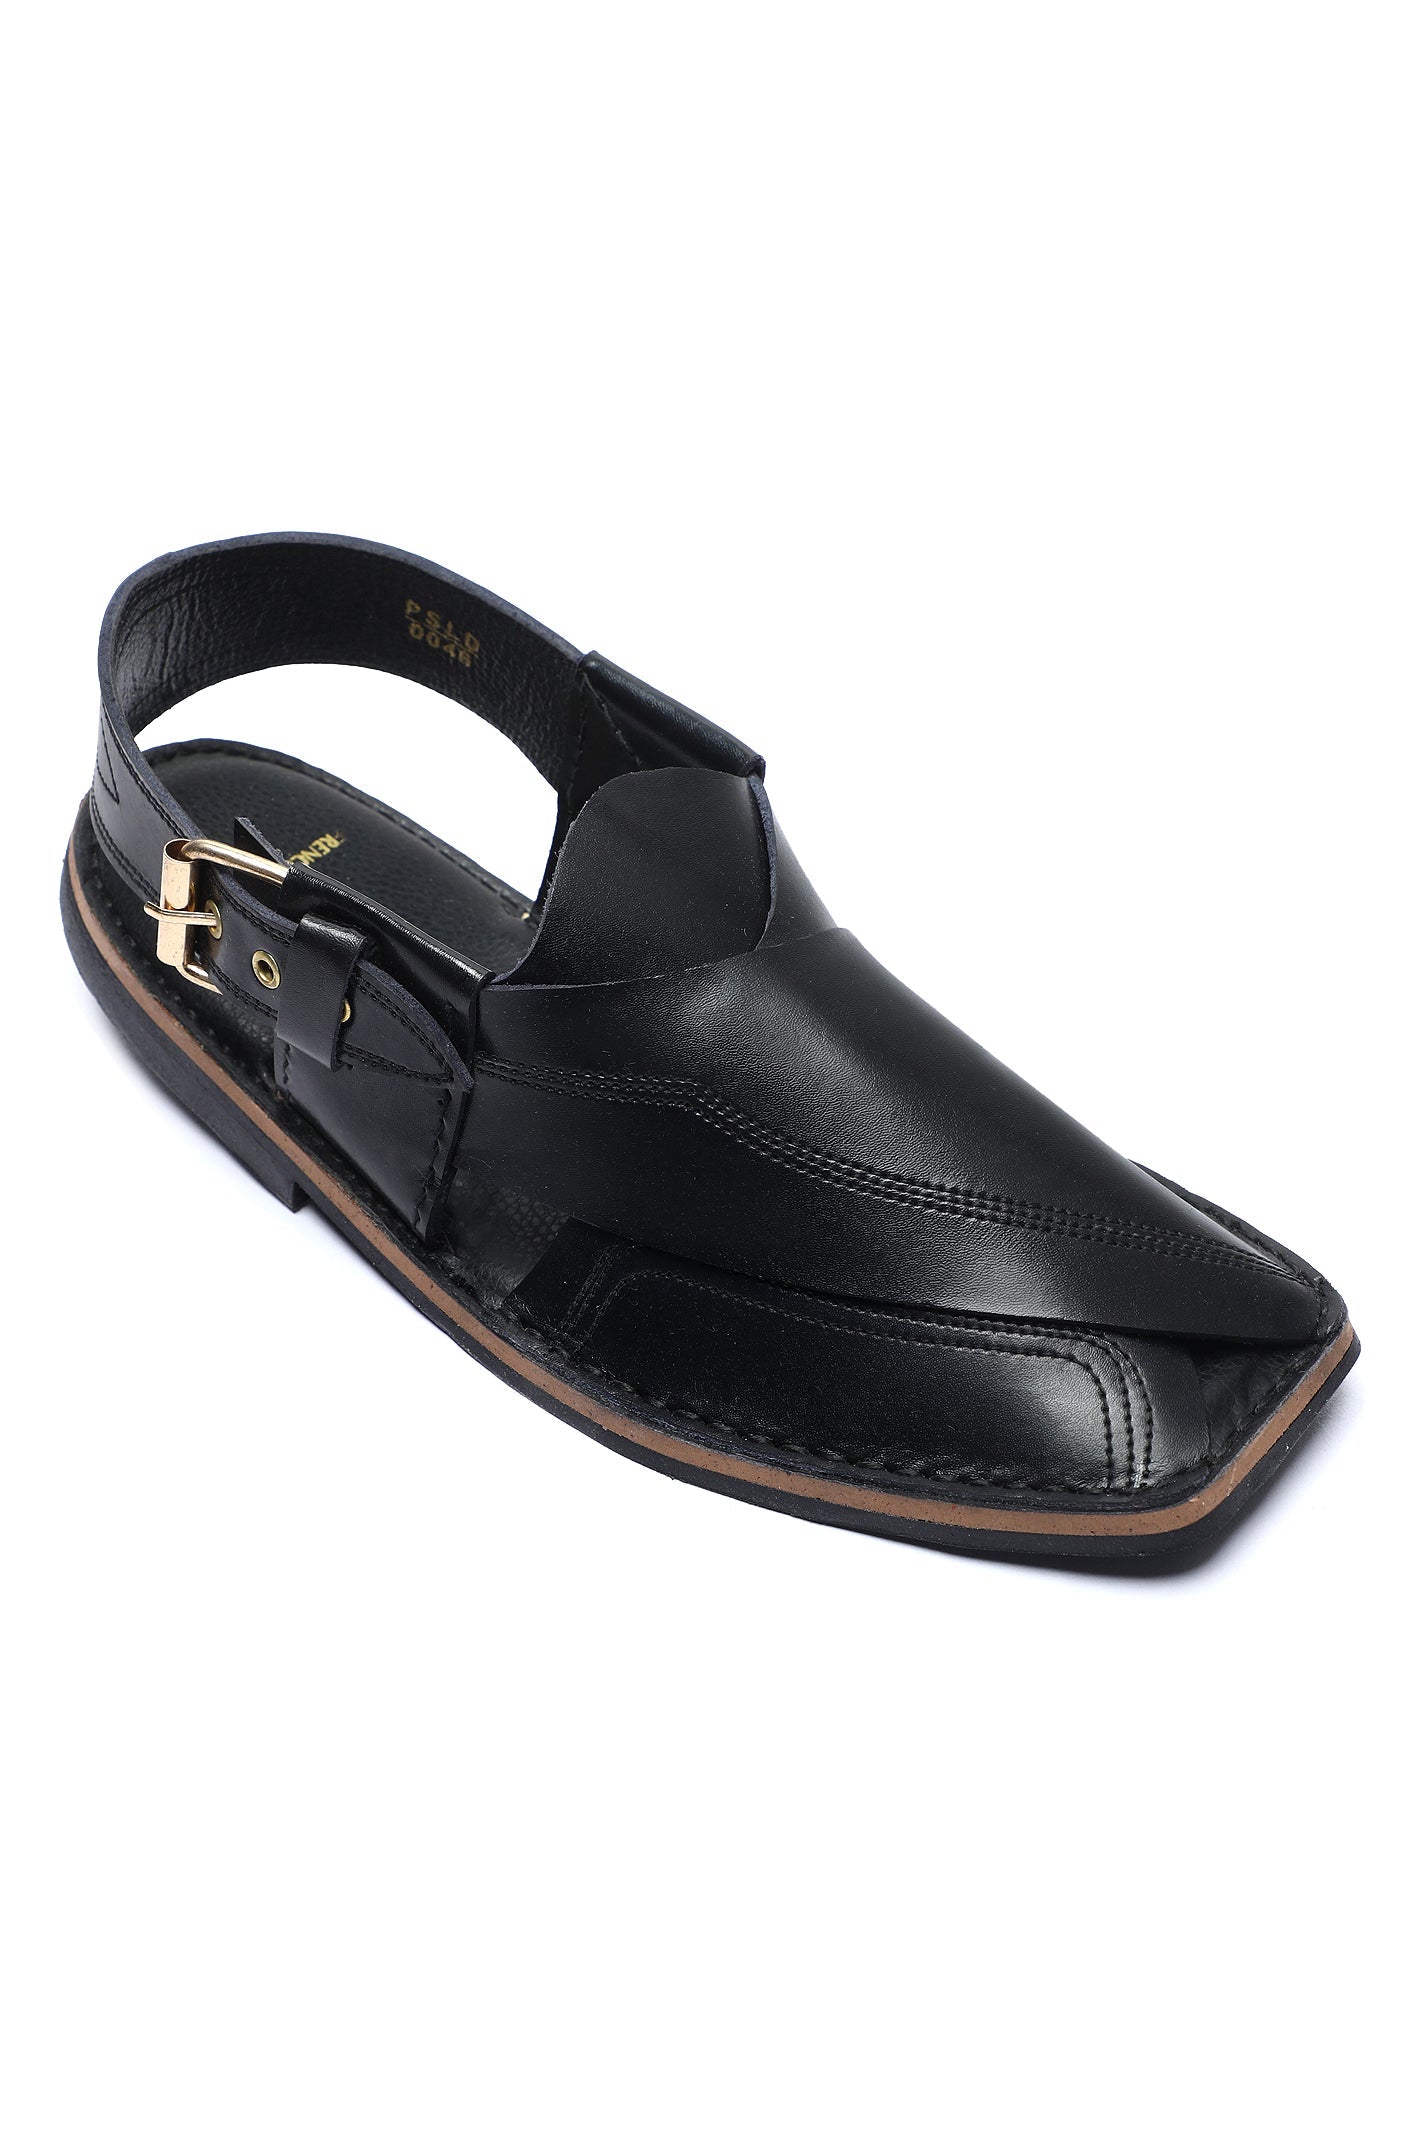 French Emporio Men's Sandal SKU: PSLD-0046-BLACK - Diners